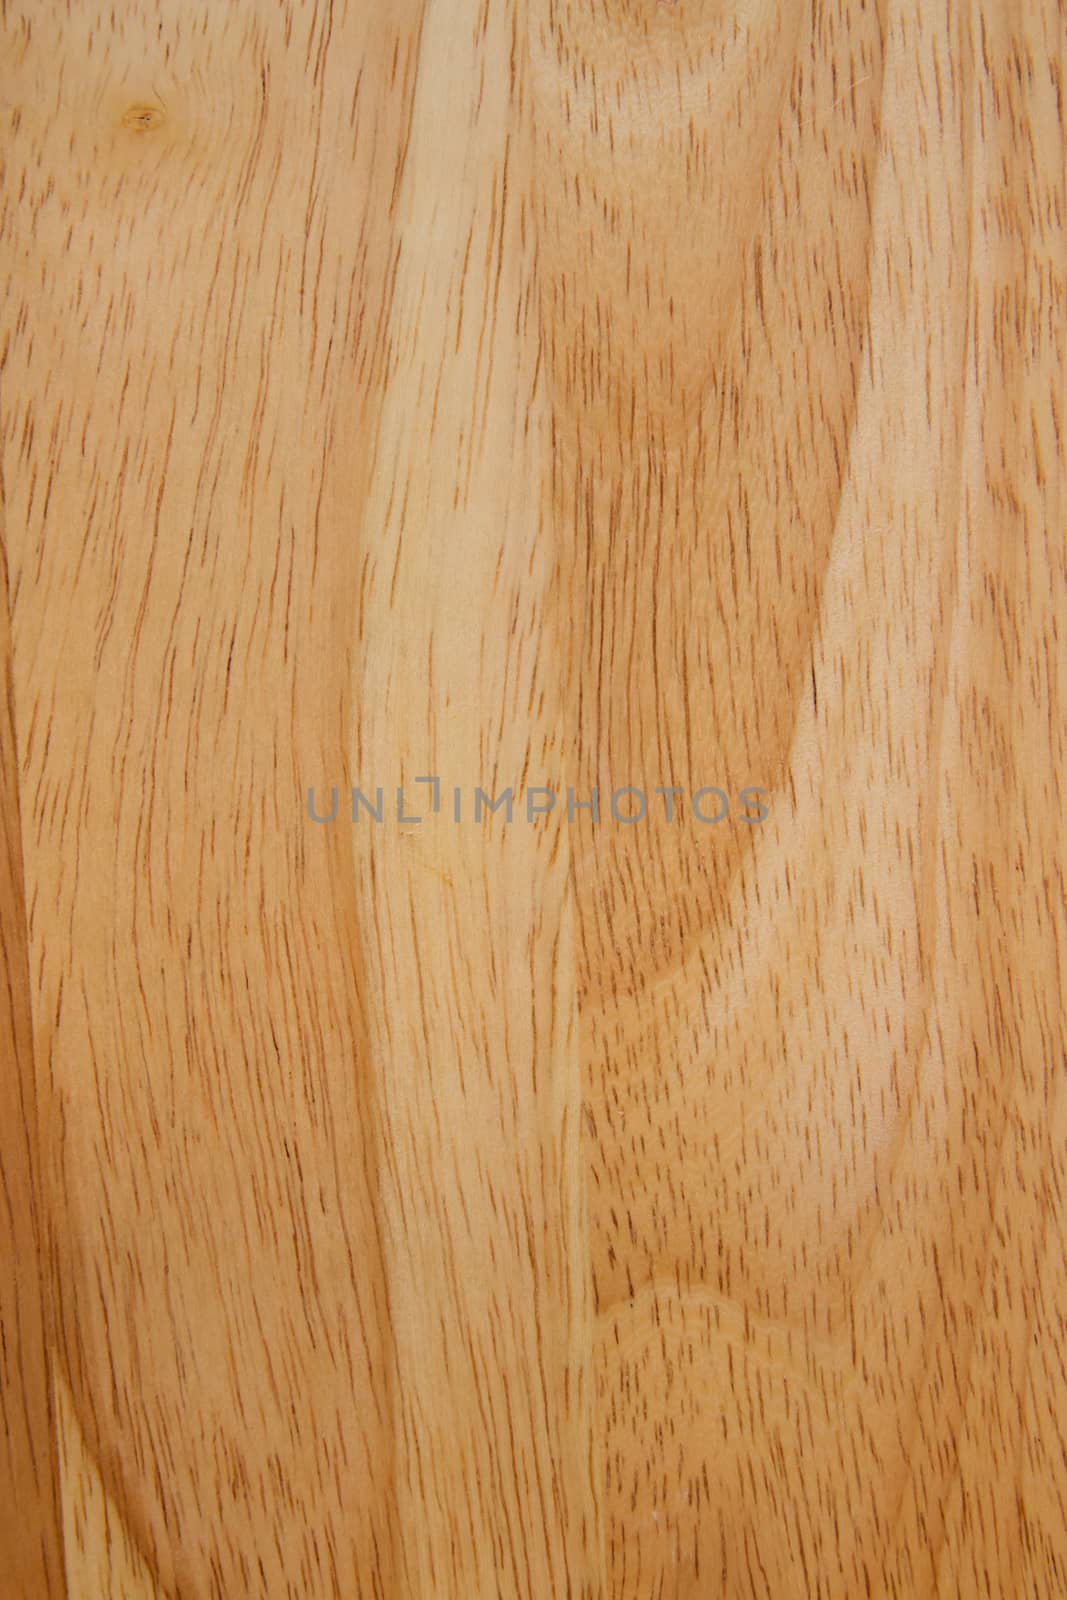 Wooden texture by pilotL39